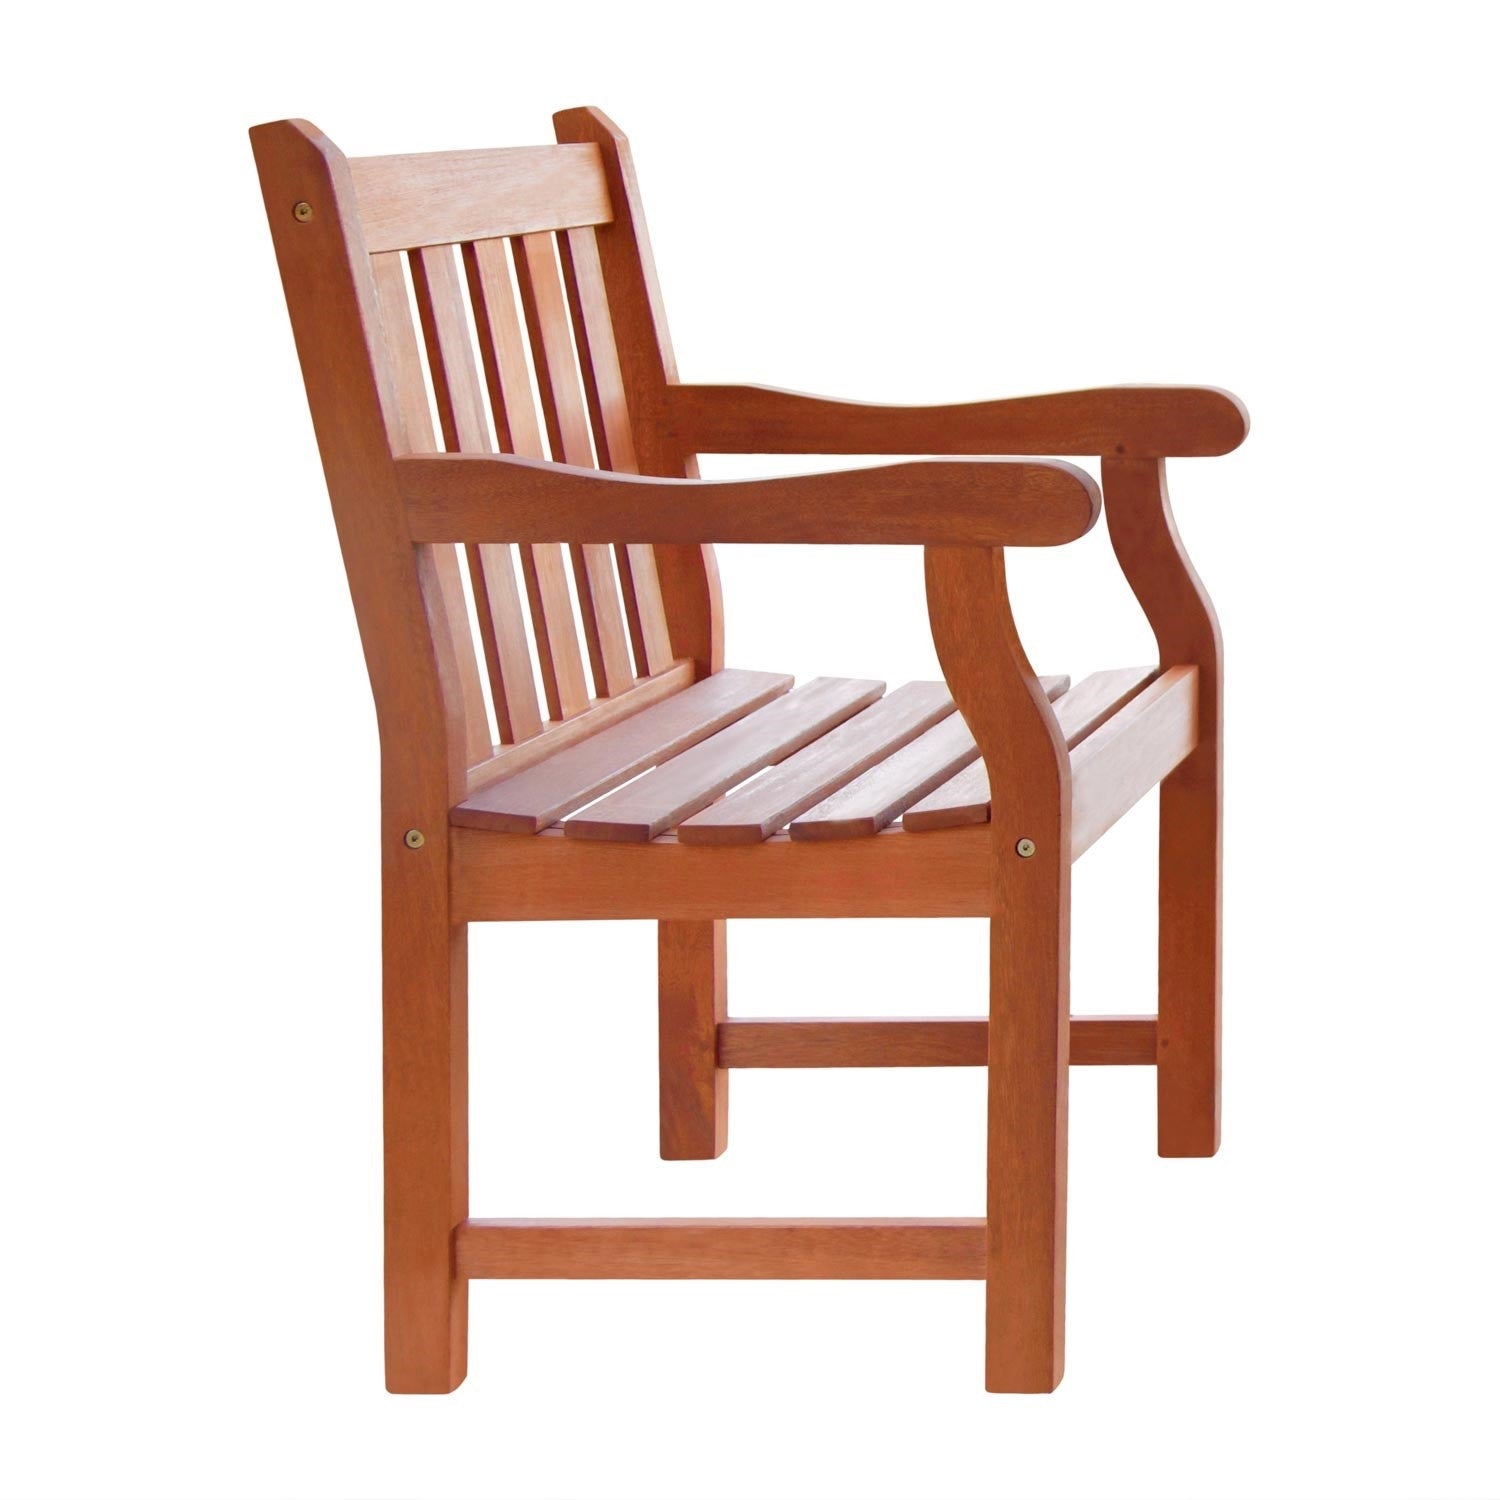 Brown-Garden-Armchair-Outdoor-Chairs